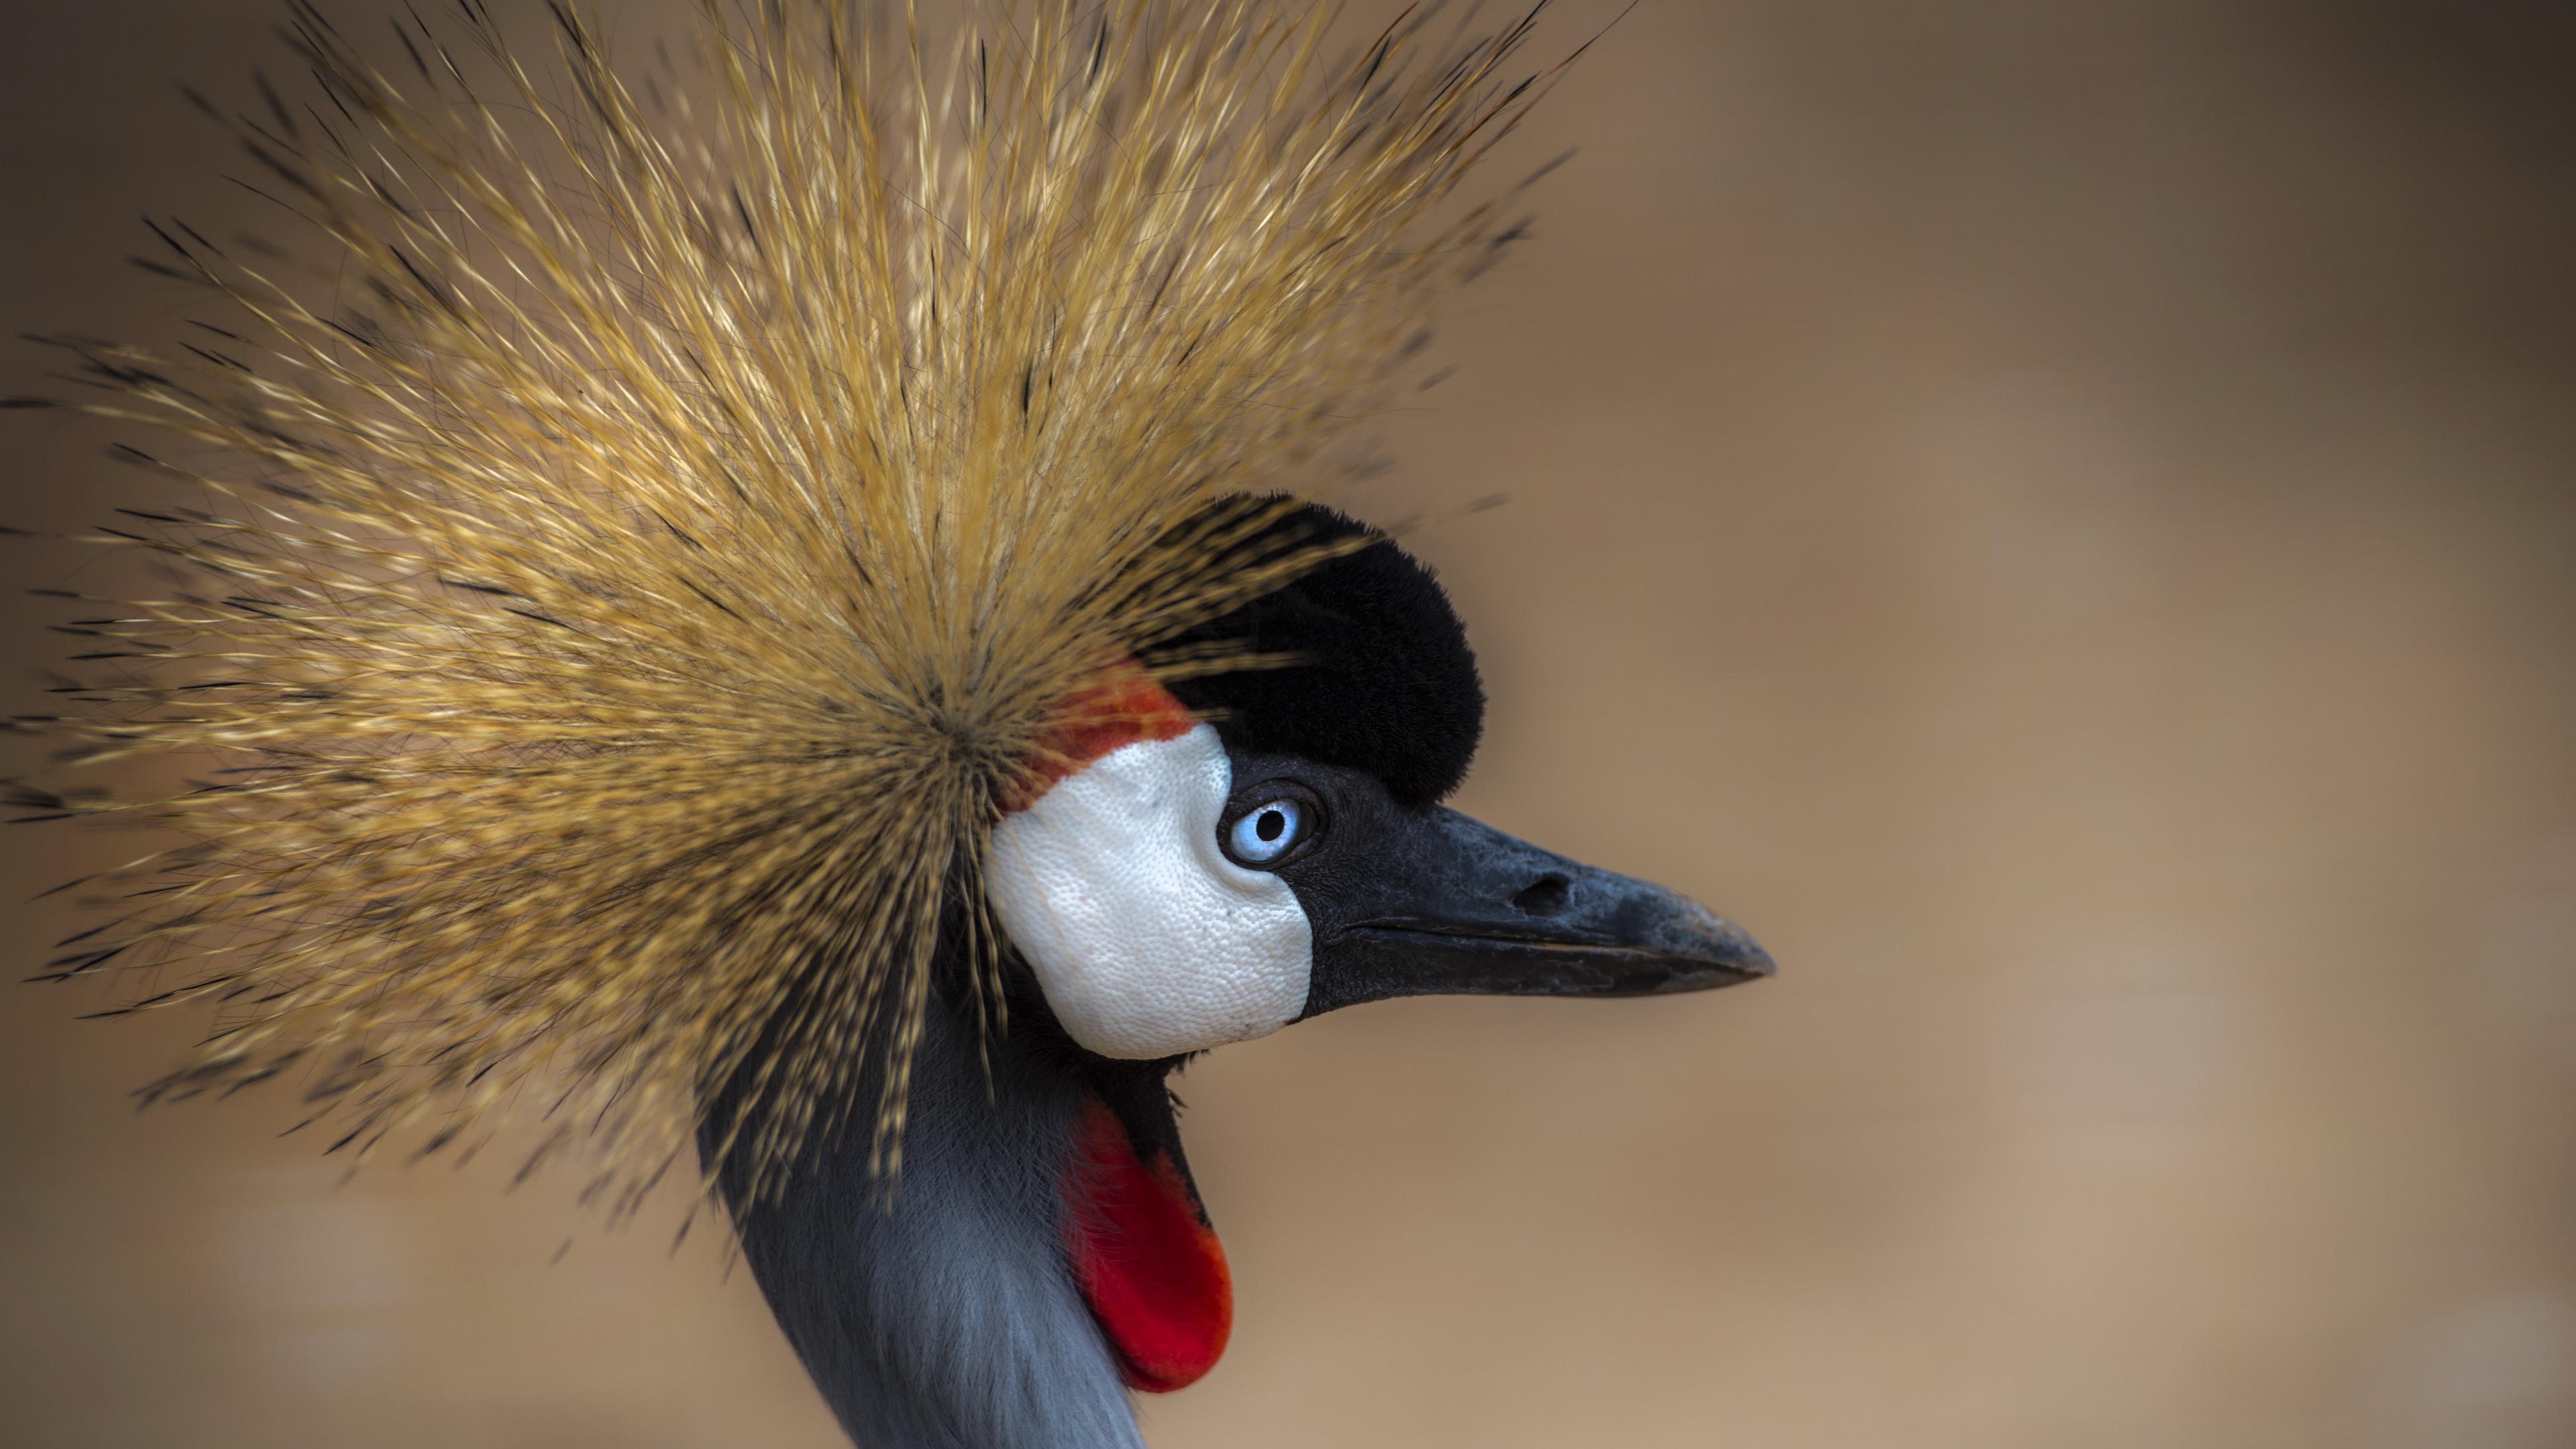 Grey crowned crane, 4K ultra wallpaper, Bird in high resolution, HD background, 3840x2160 4K Desktop